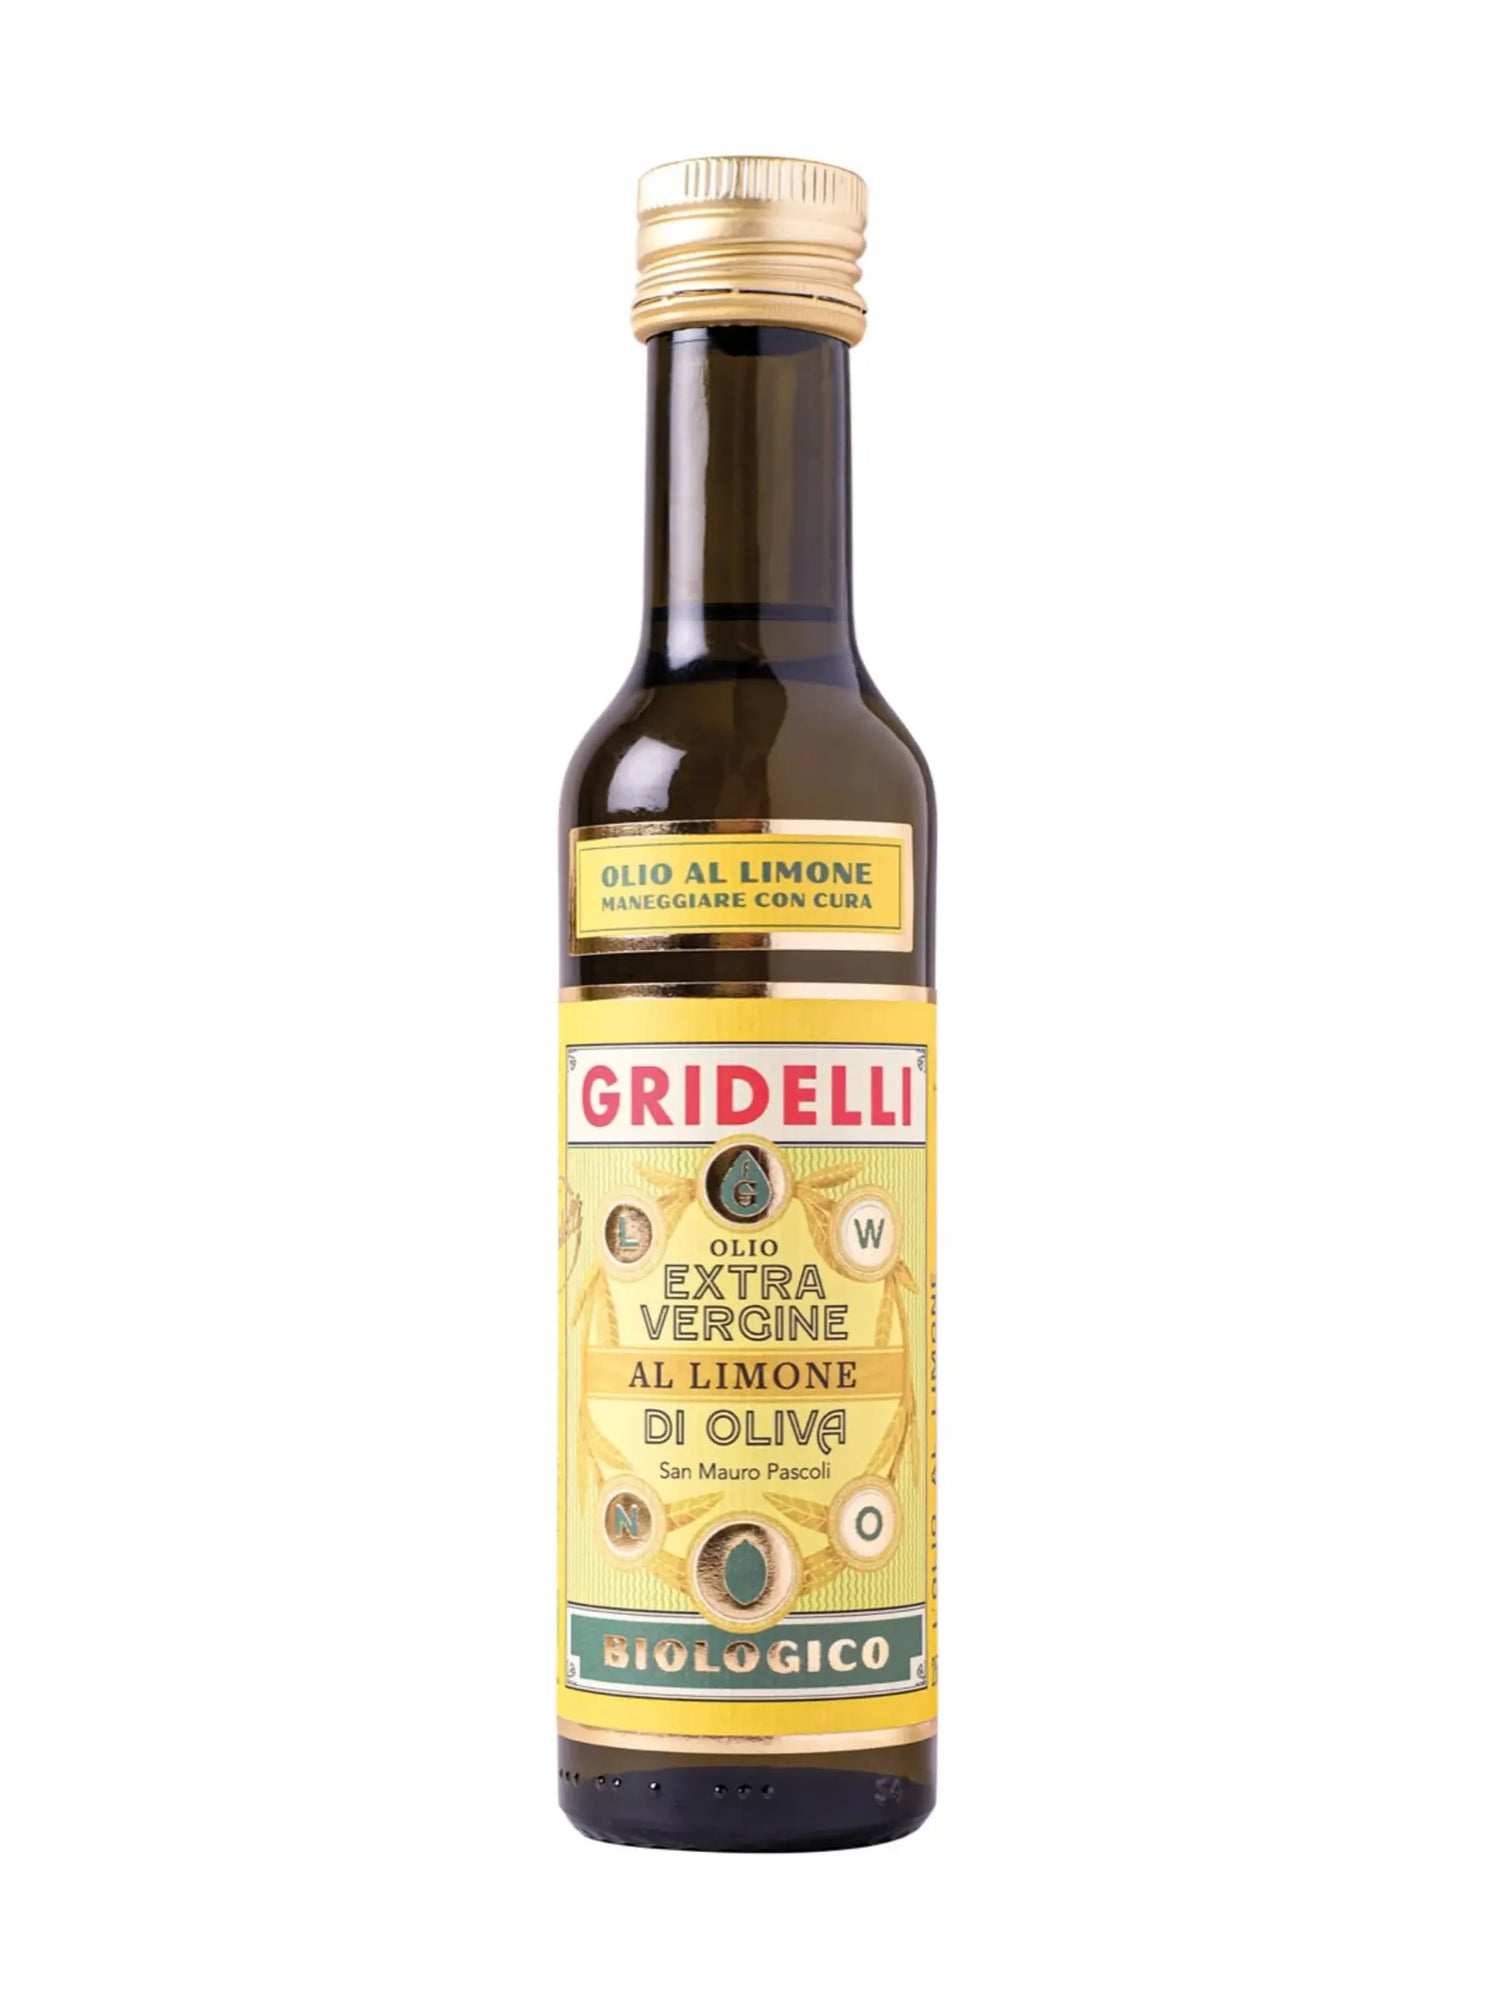 GRIDELLI: Olio Al Limone, extra virgin olive oil (250 ml)